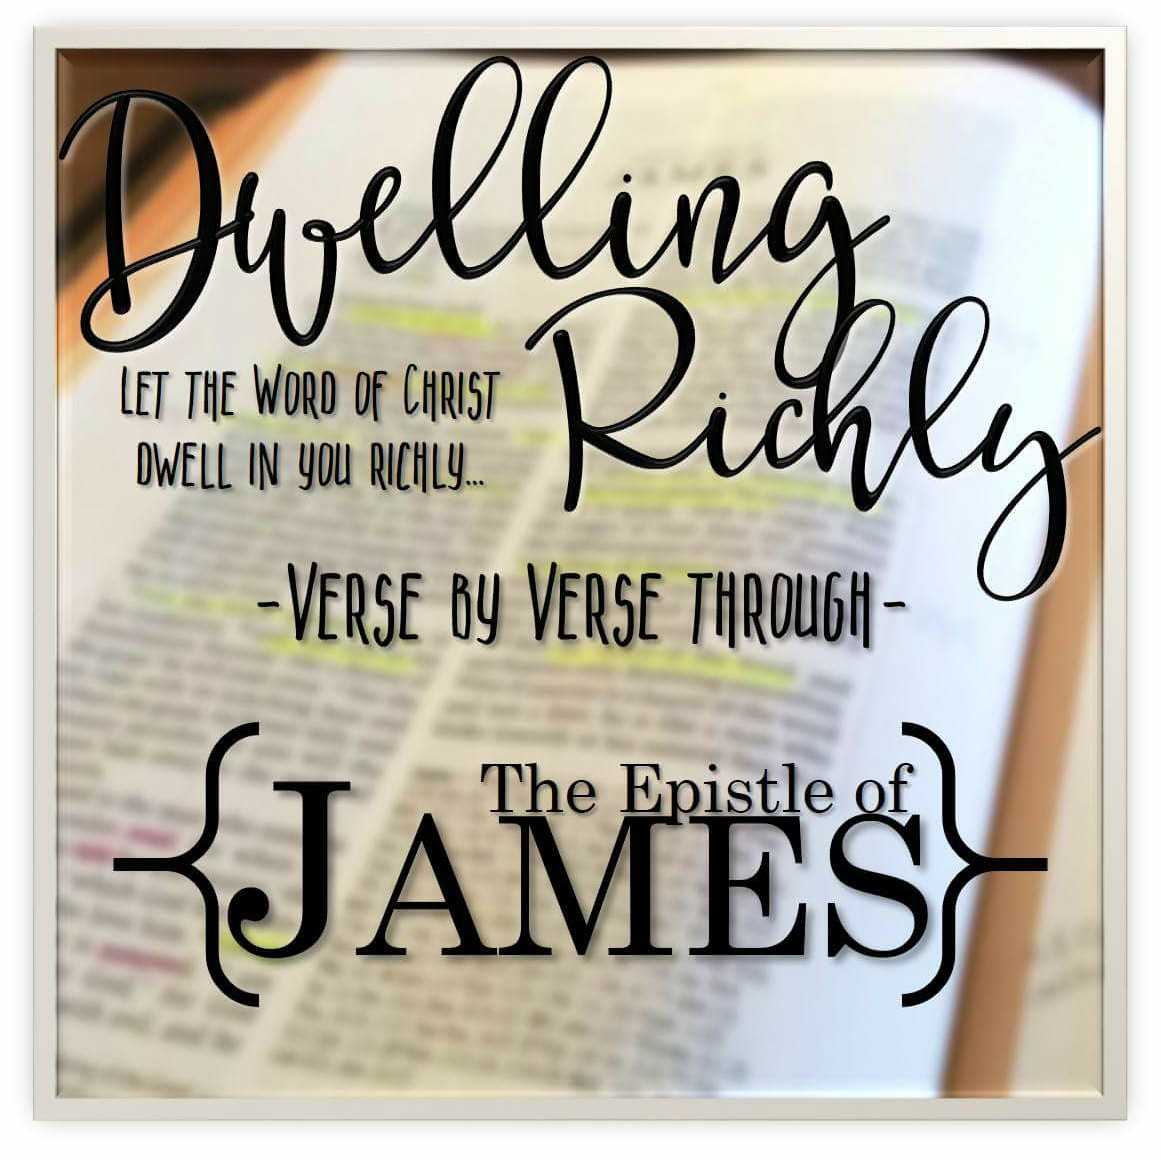 James 4:7-12